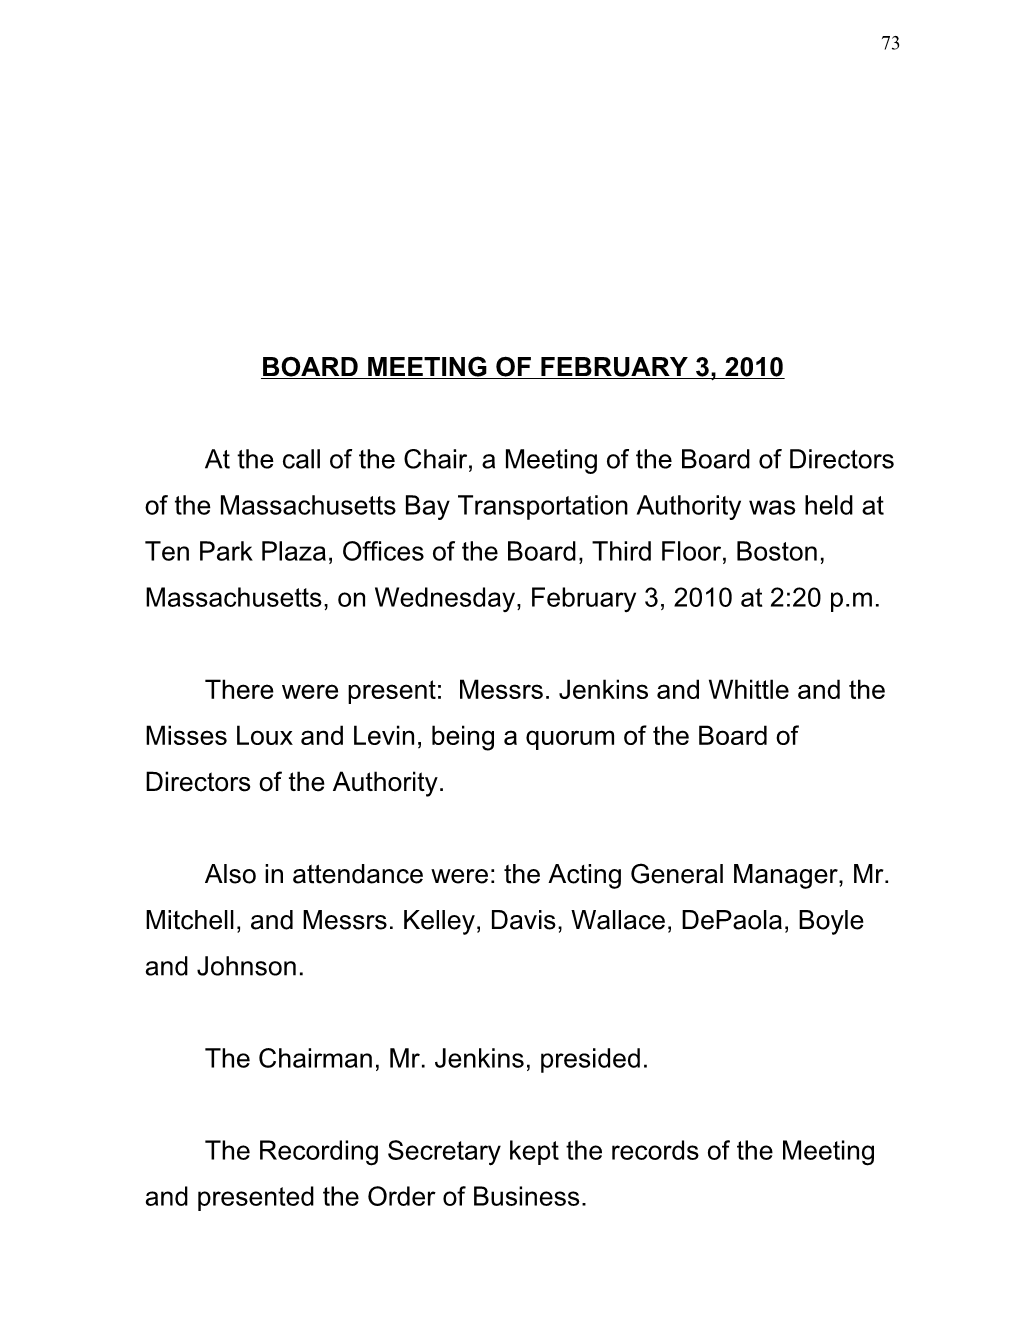 Board Meeting of February 3, 2010